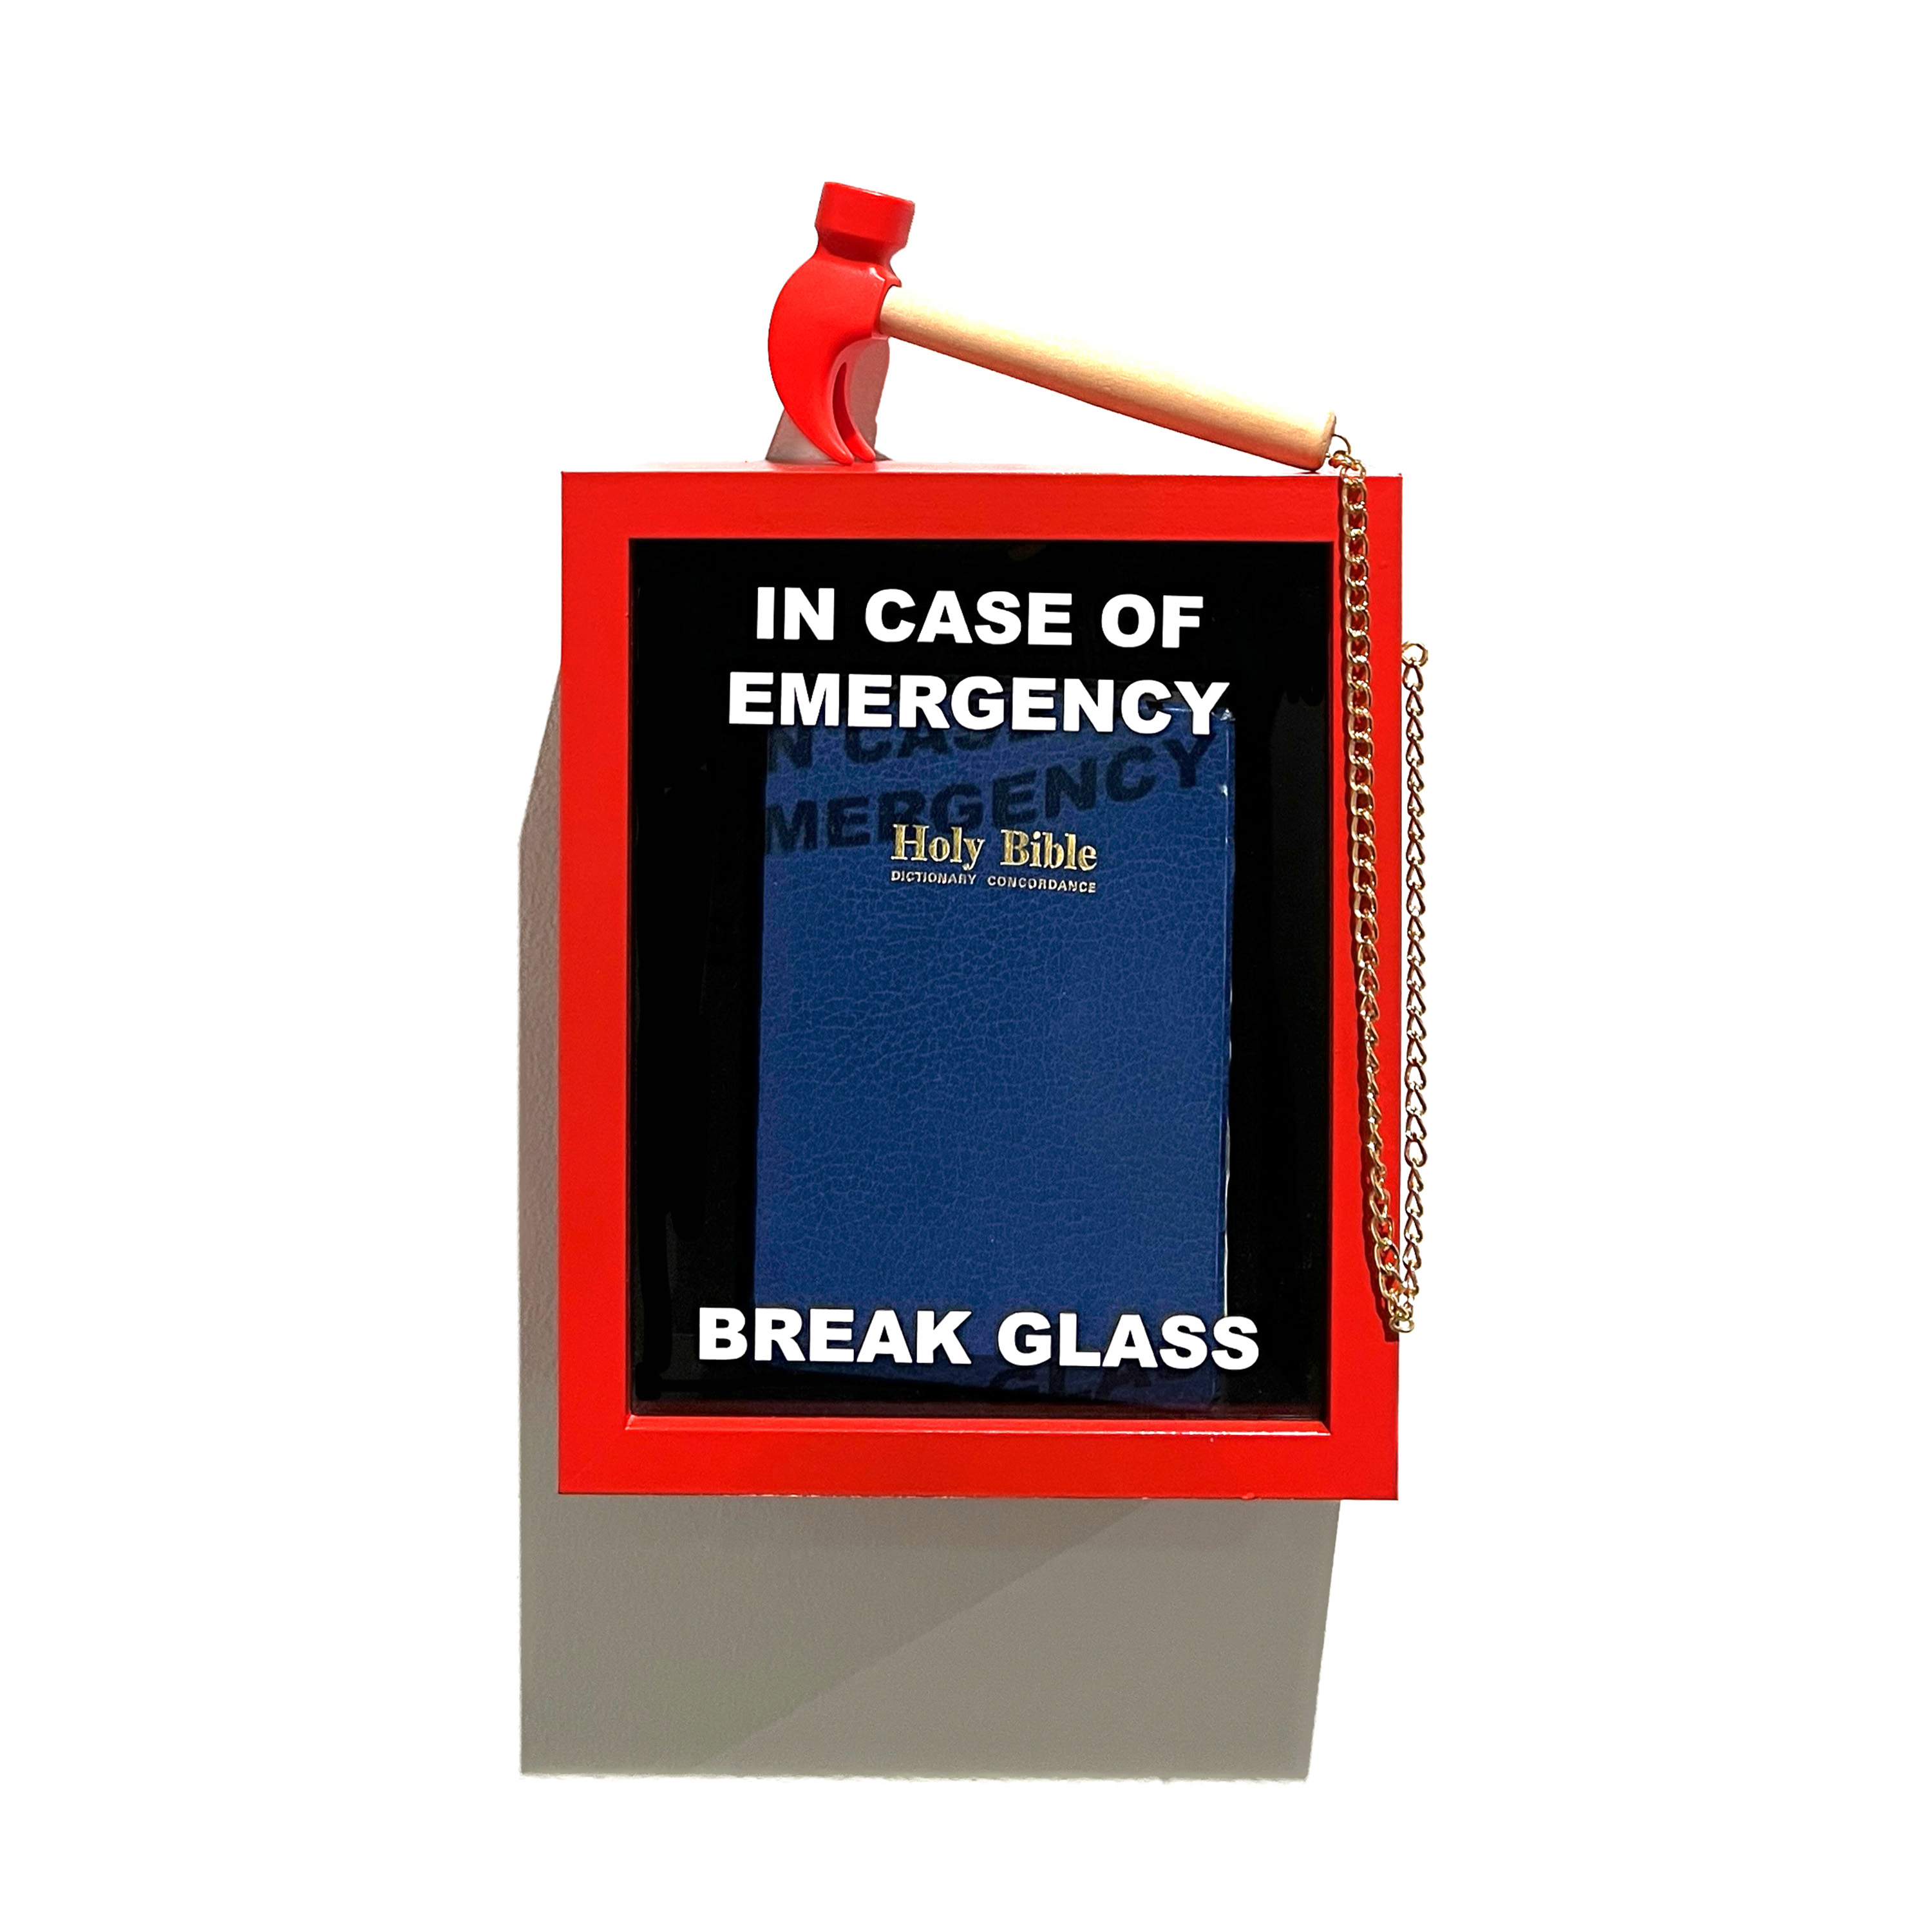 Space One Eleven Presents: In Case of Emergency, Break Glass